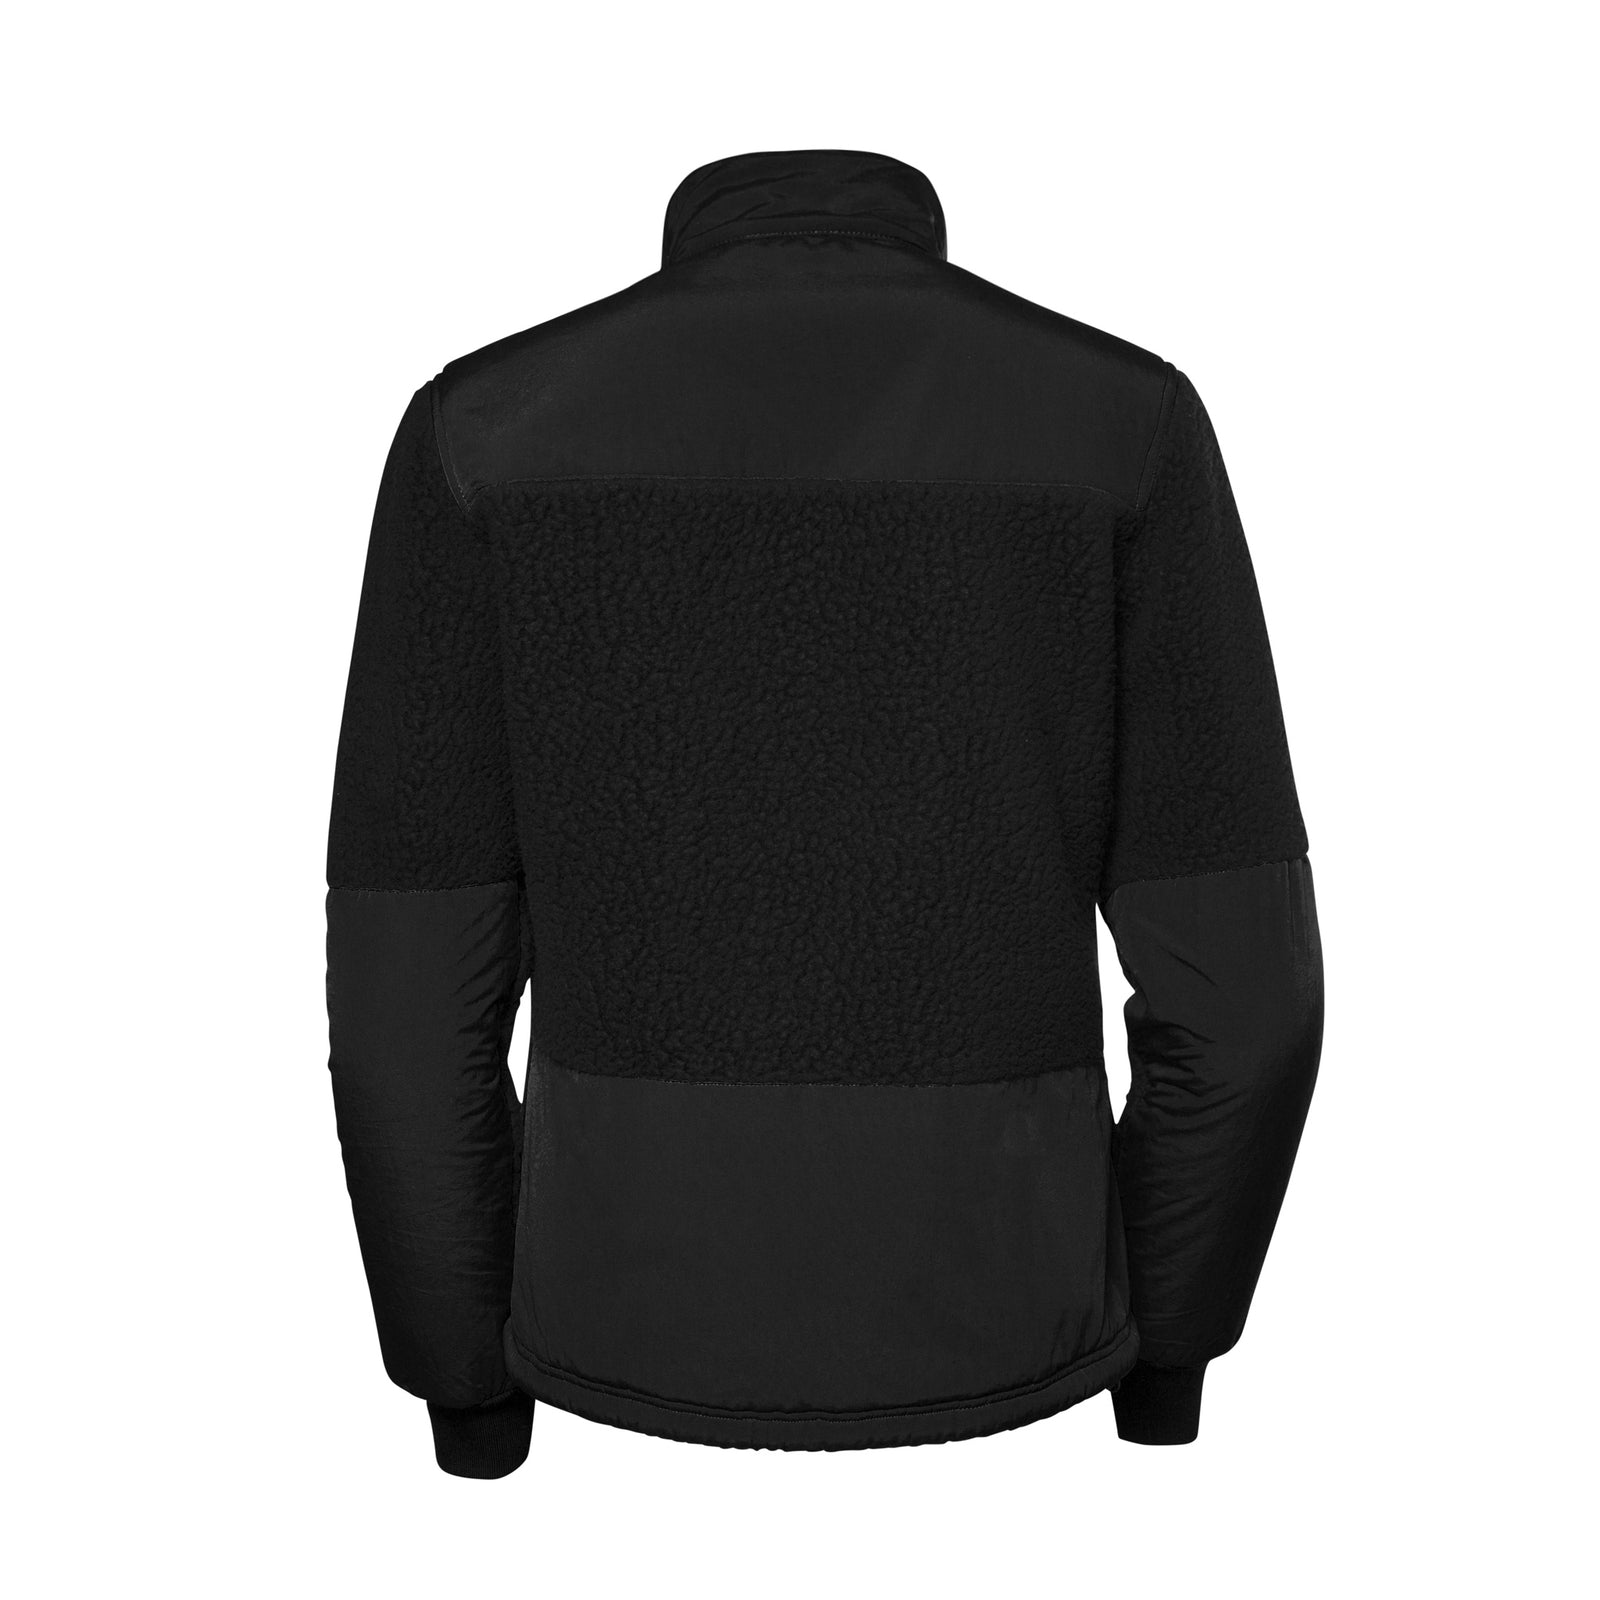 Full back product shot of the women's subalpine fleece in "Black".